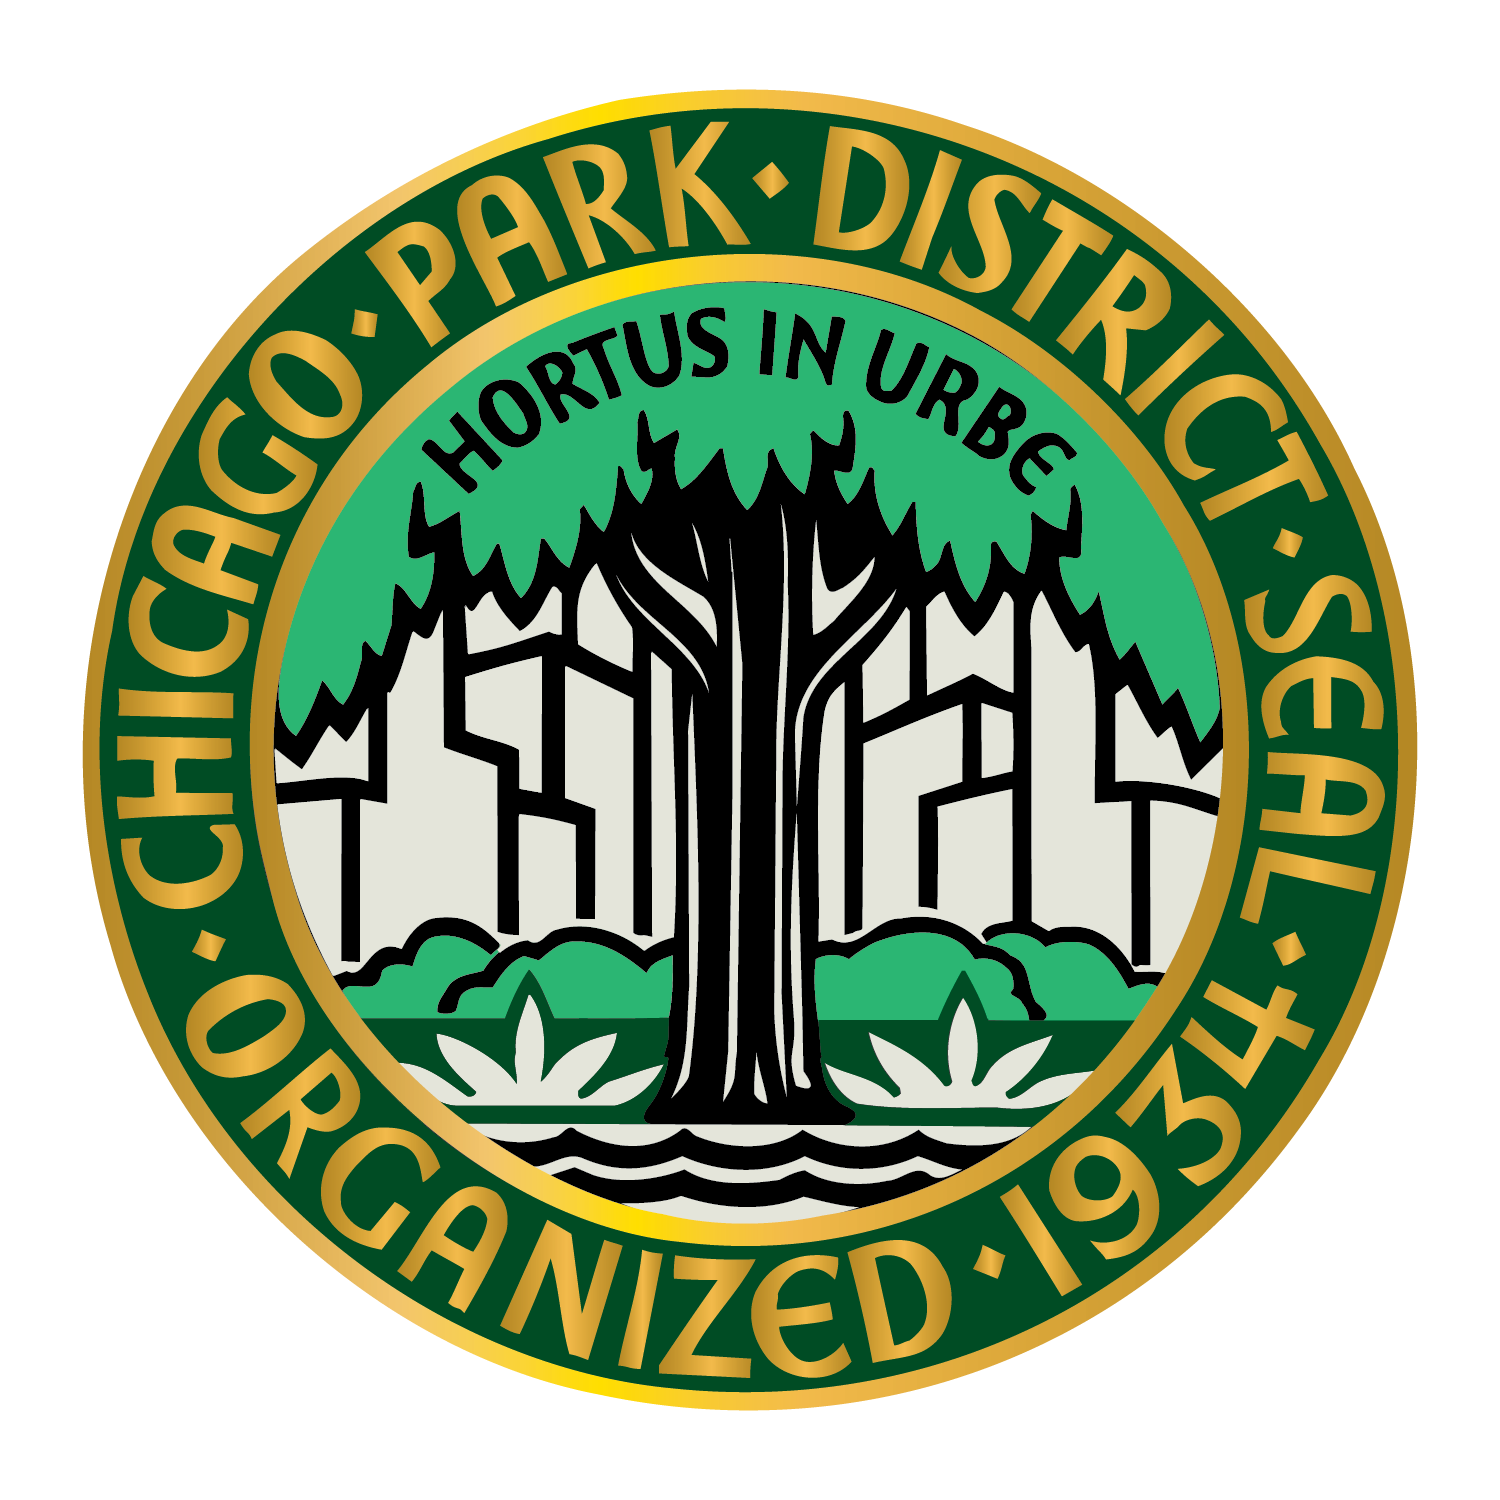 Chicago Park District